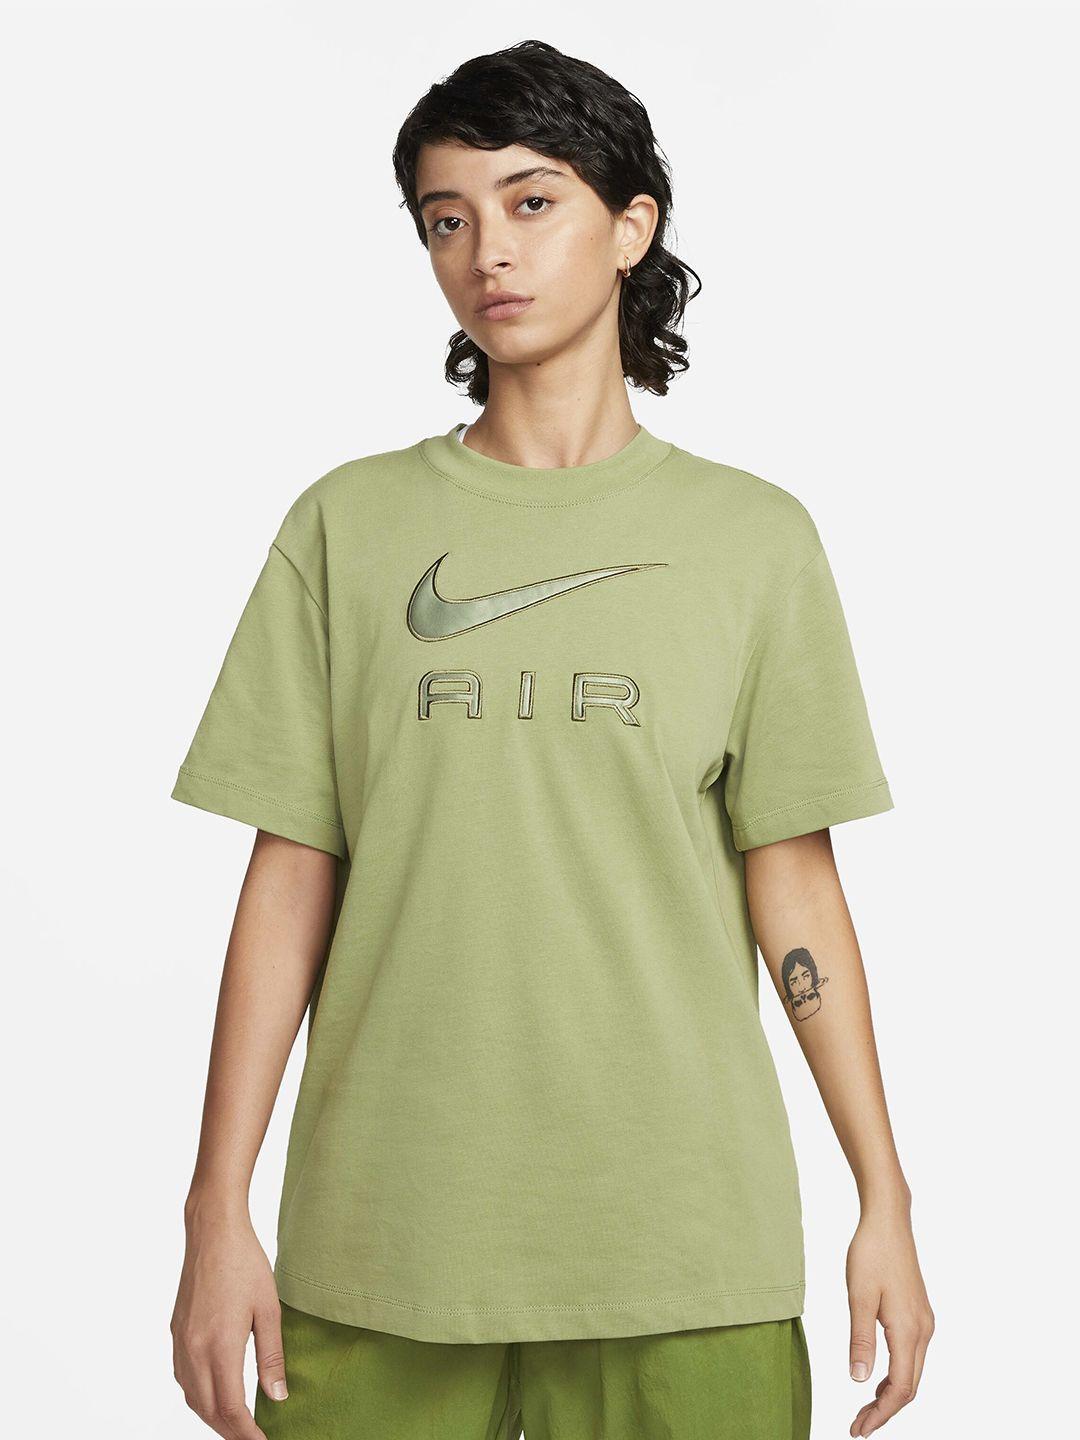 nike air short sleeves brand logo printed round neck cotton t-shirt